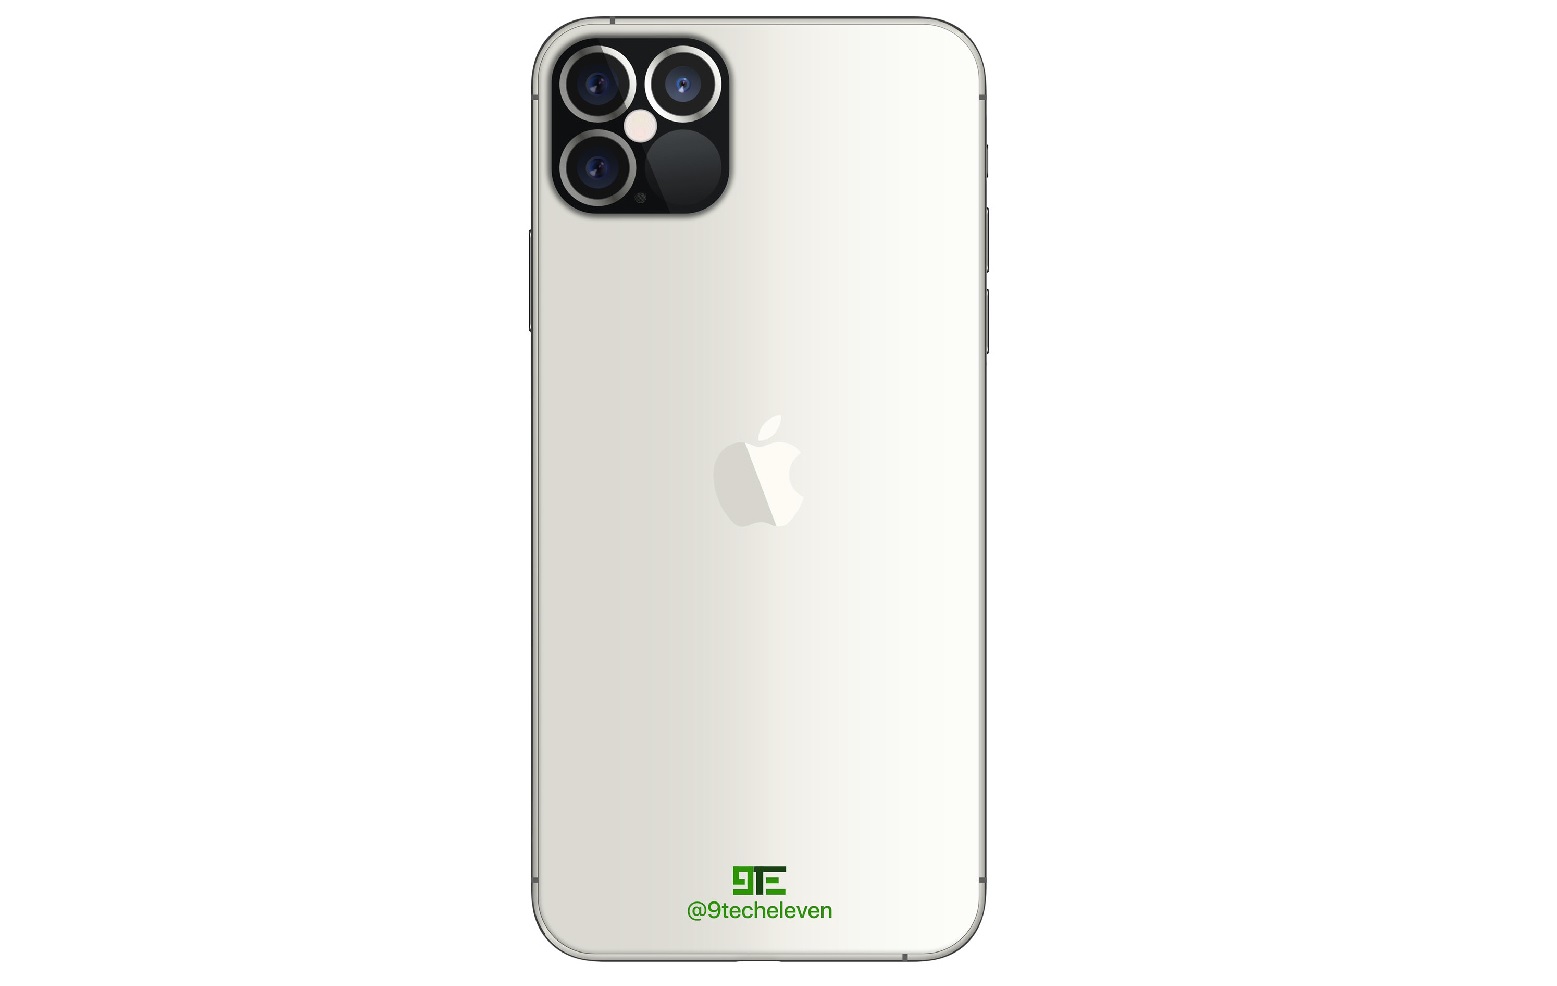 major-iphone-12-pro-5g-leak-reveals-new-camera-design-and-lidar-scanner-1.jpg